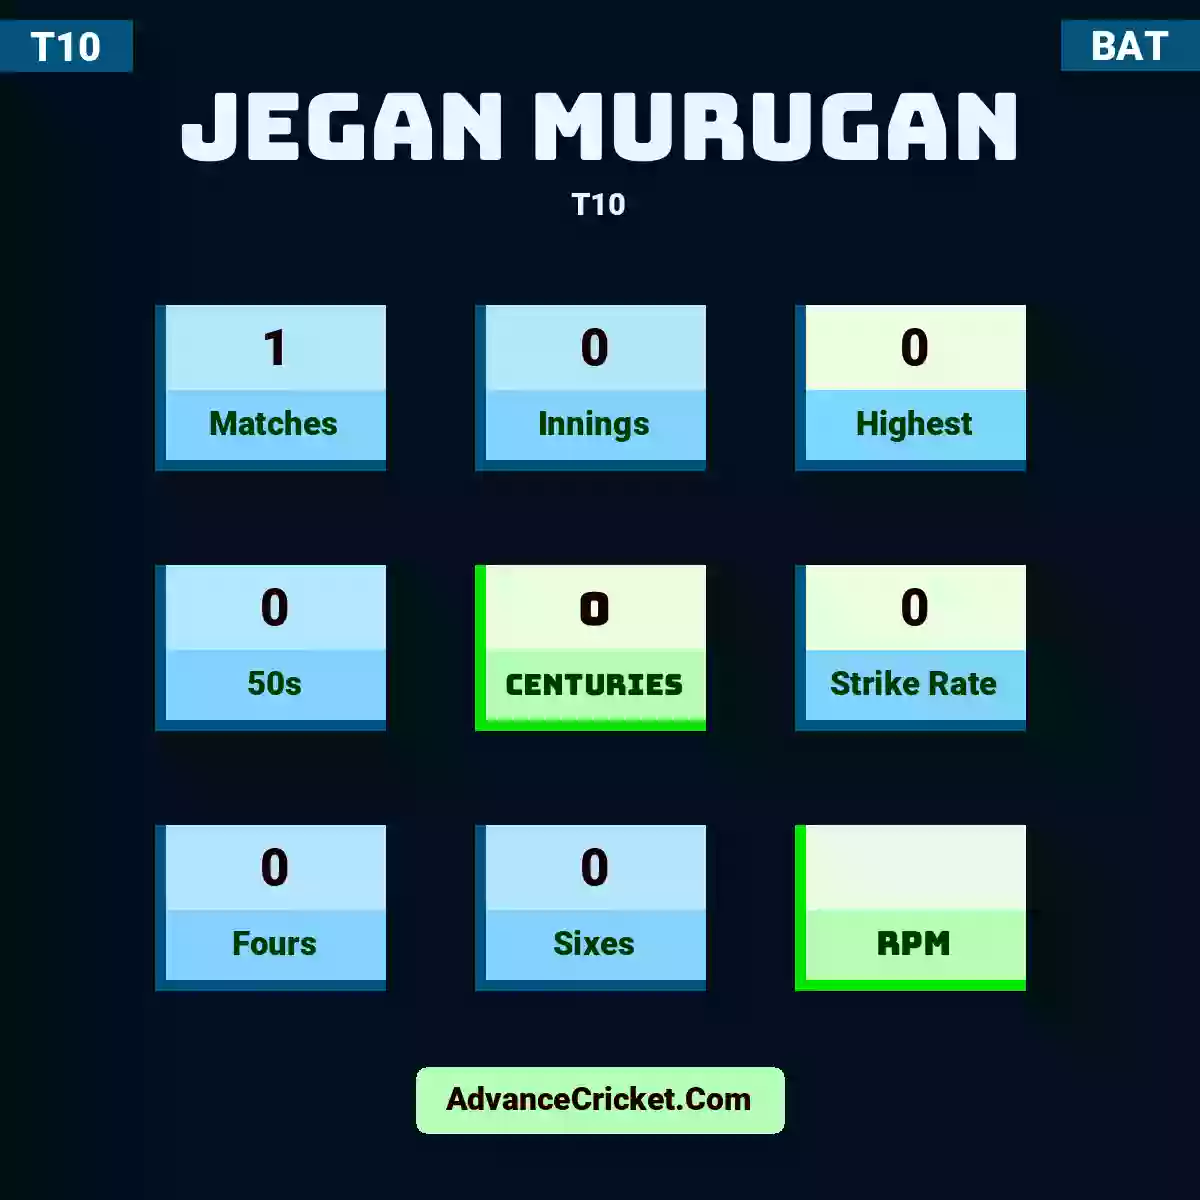 Jegan Murugan T10 , Jegan Murugan played 1 matches, scored 0 runs as highest, 0 half-centuries, and 0 centuries, with a strike rate of 0. J.Murugan hit 0 fours and 0 sixes.